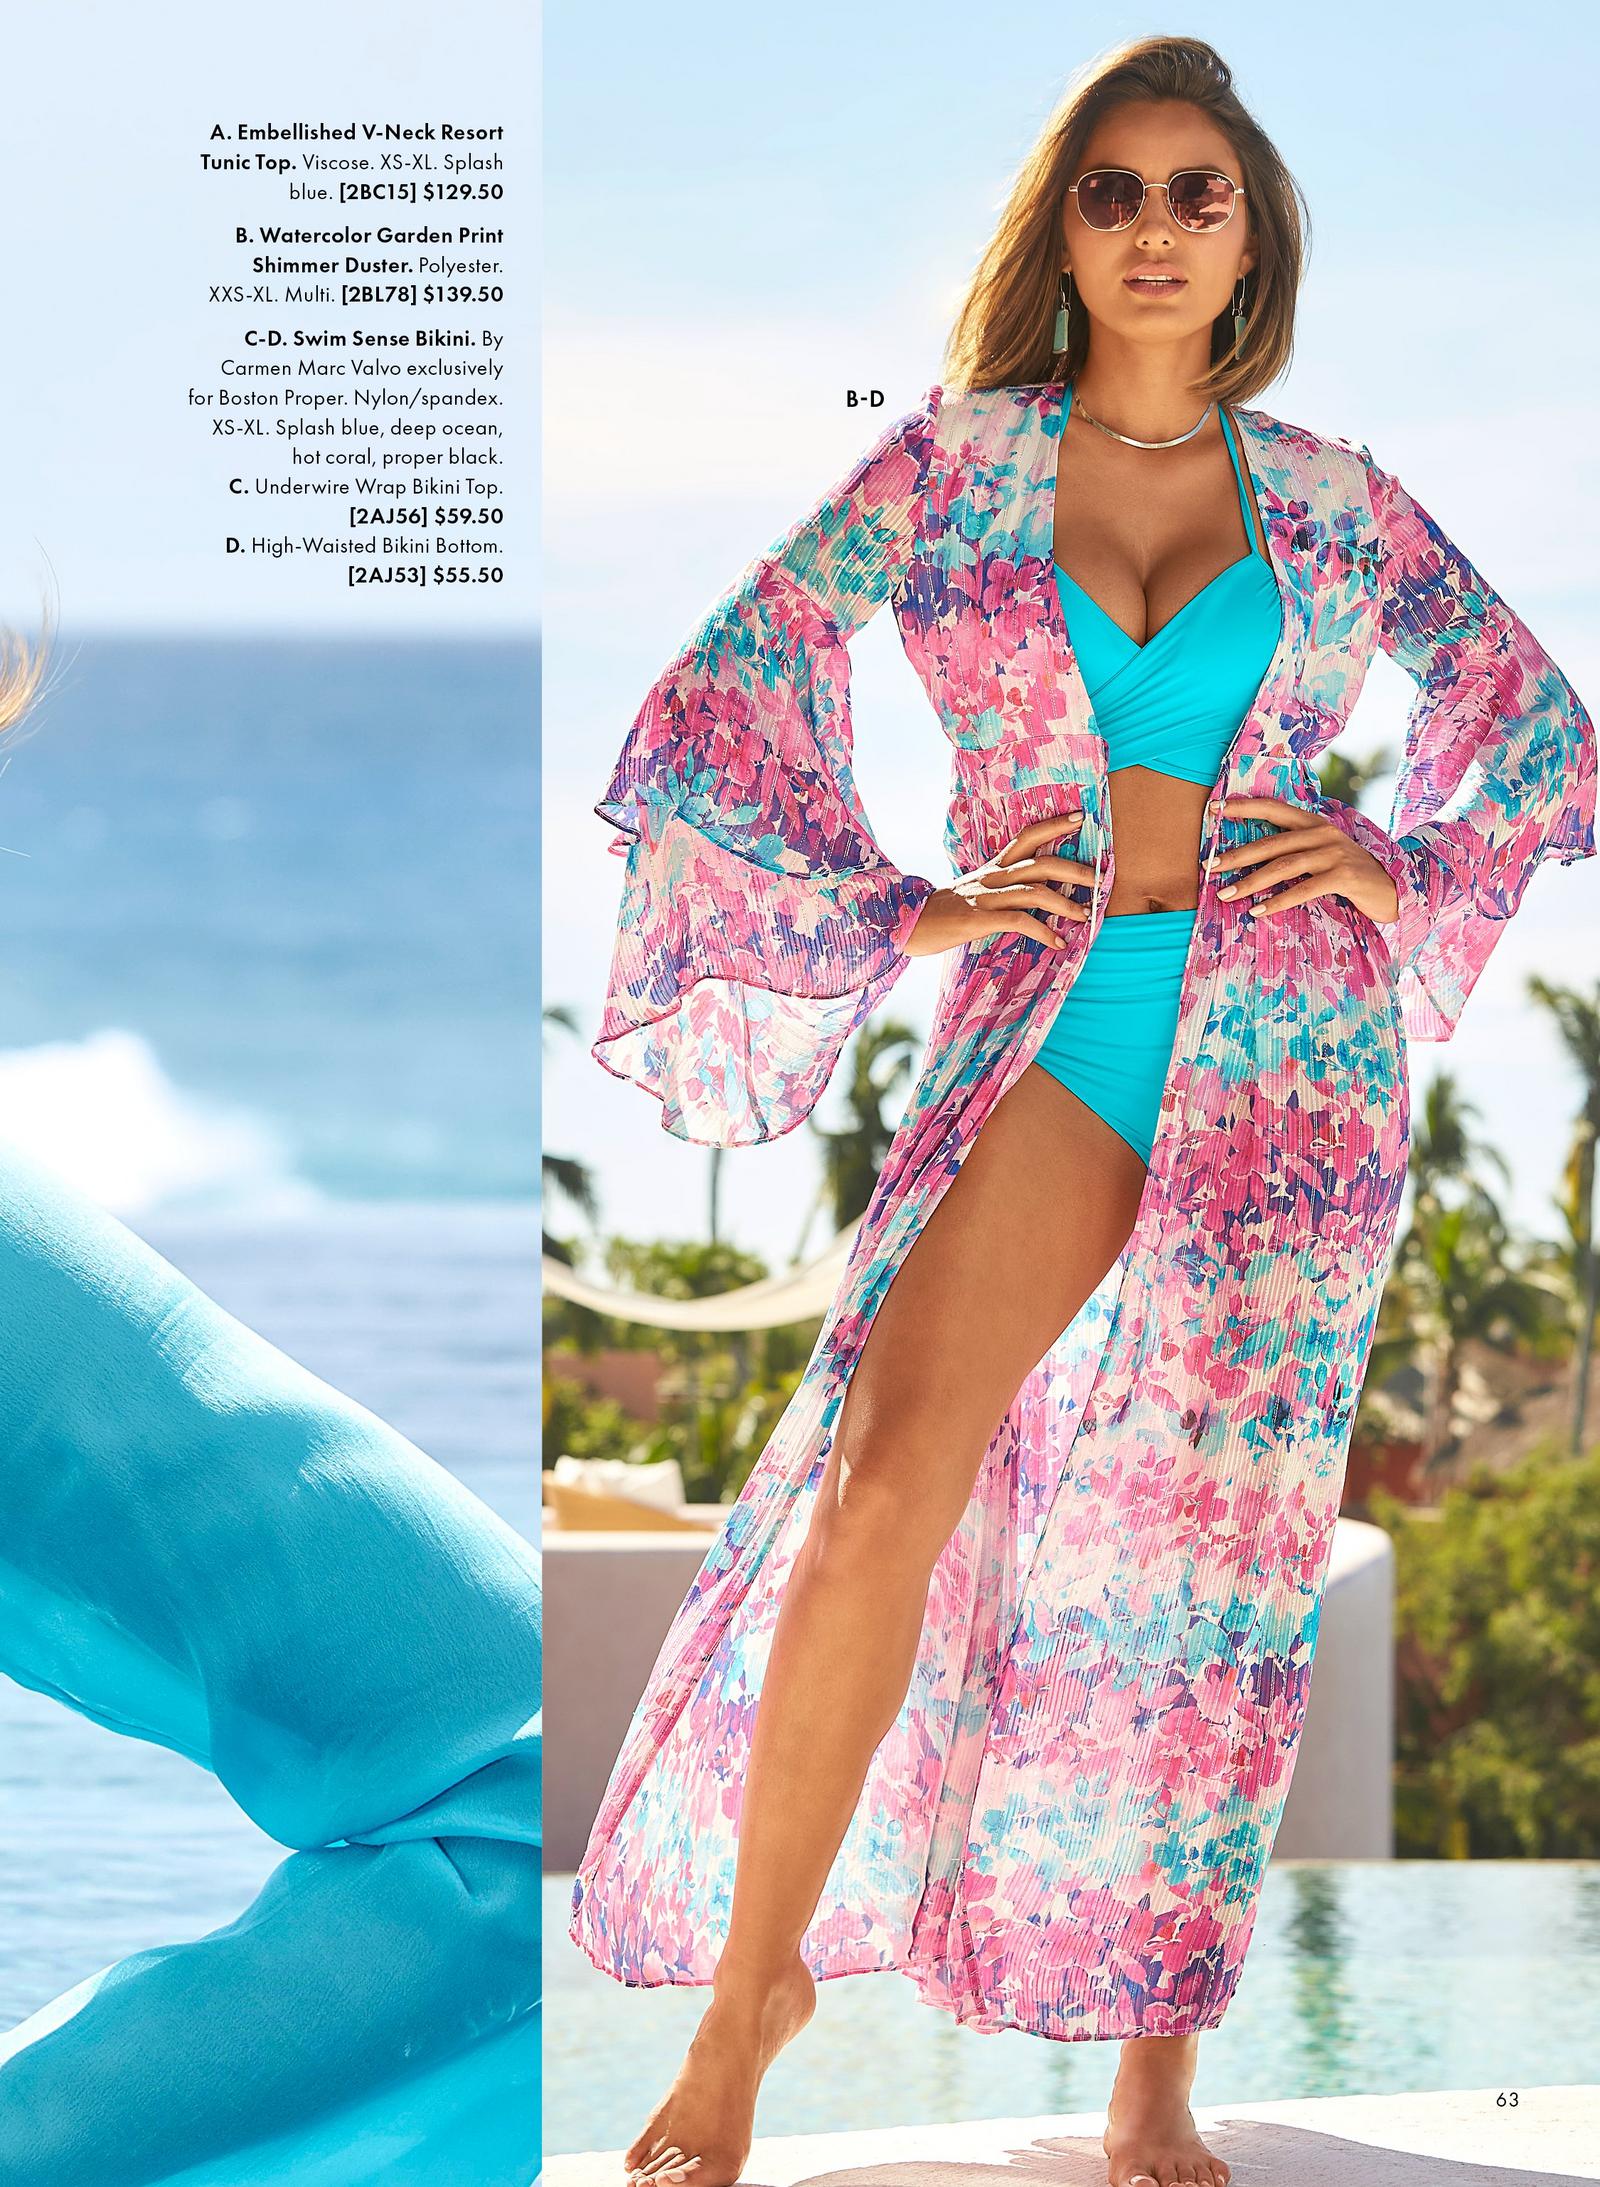 model wearing a watercolor garden print shimmer duster, blue bikini, and sunglasses.